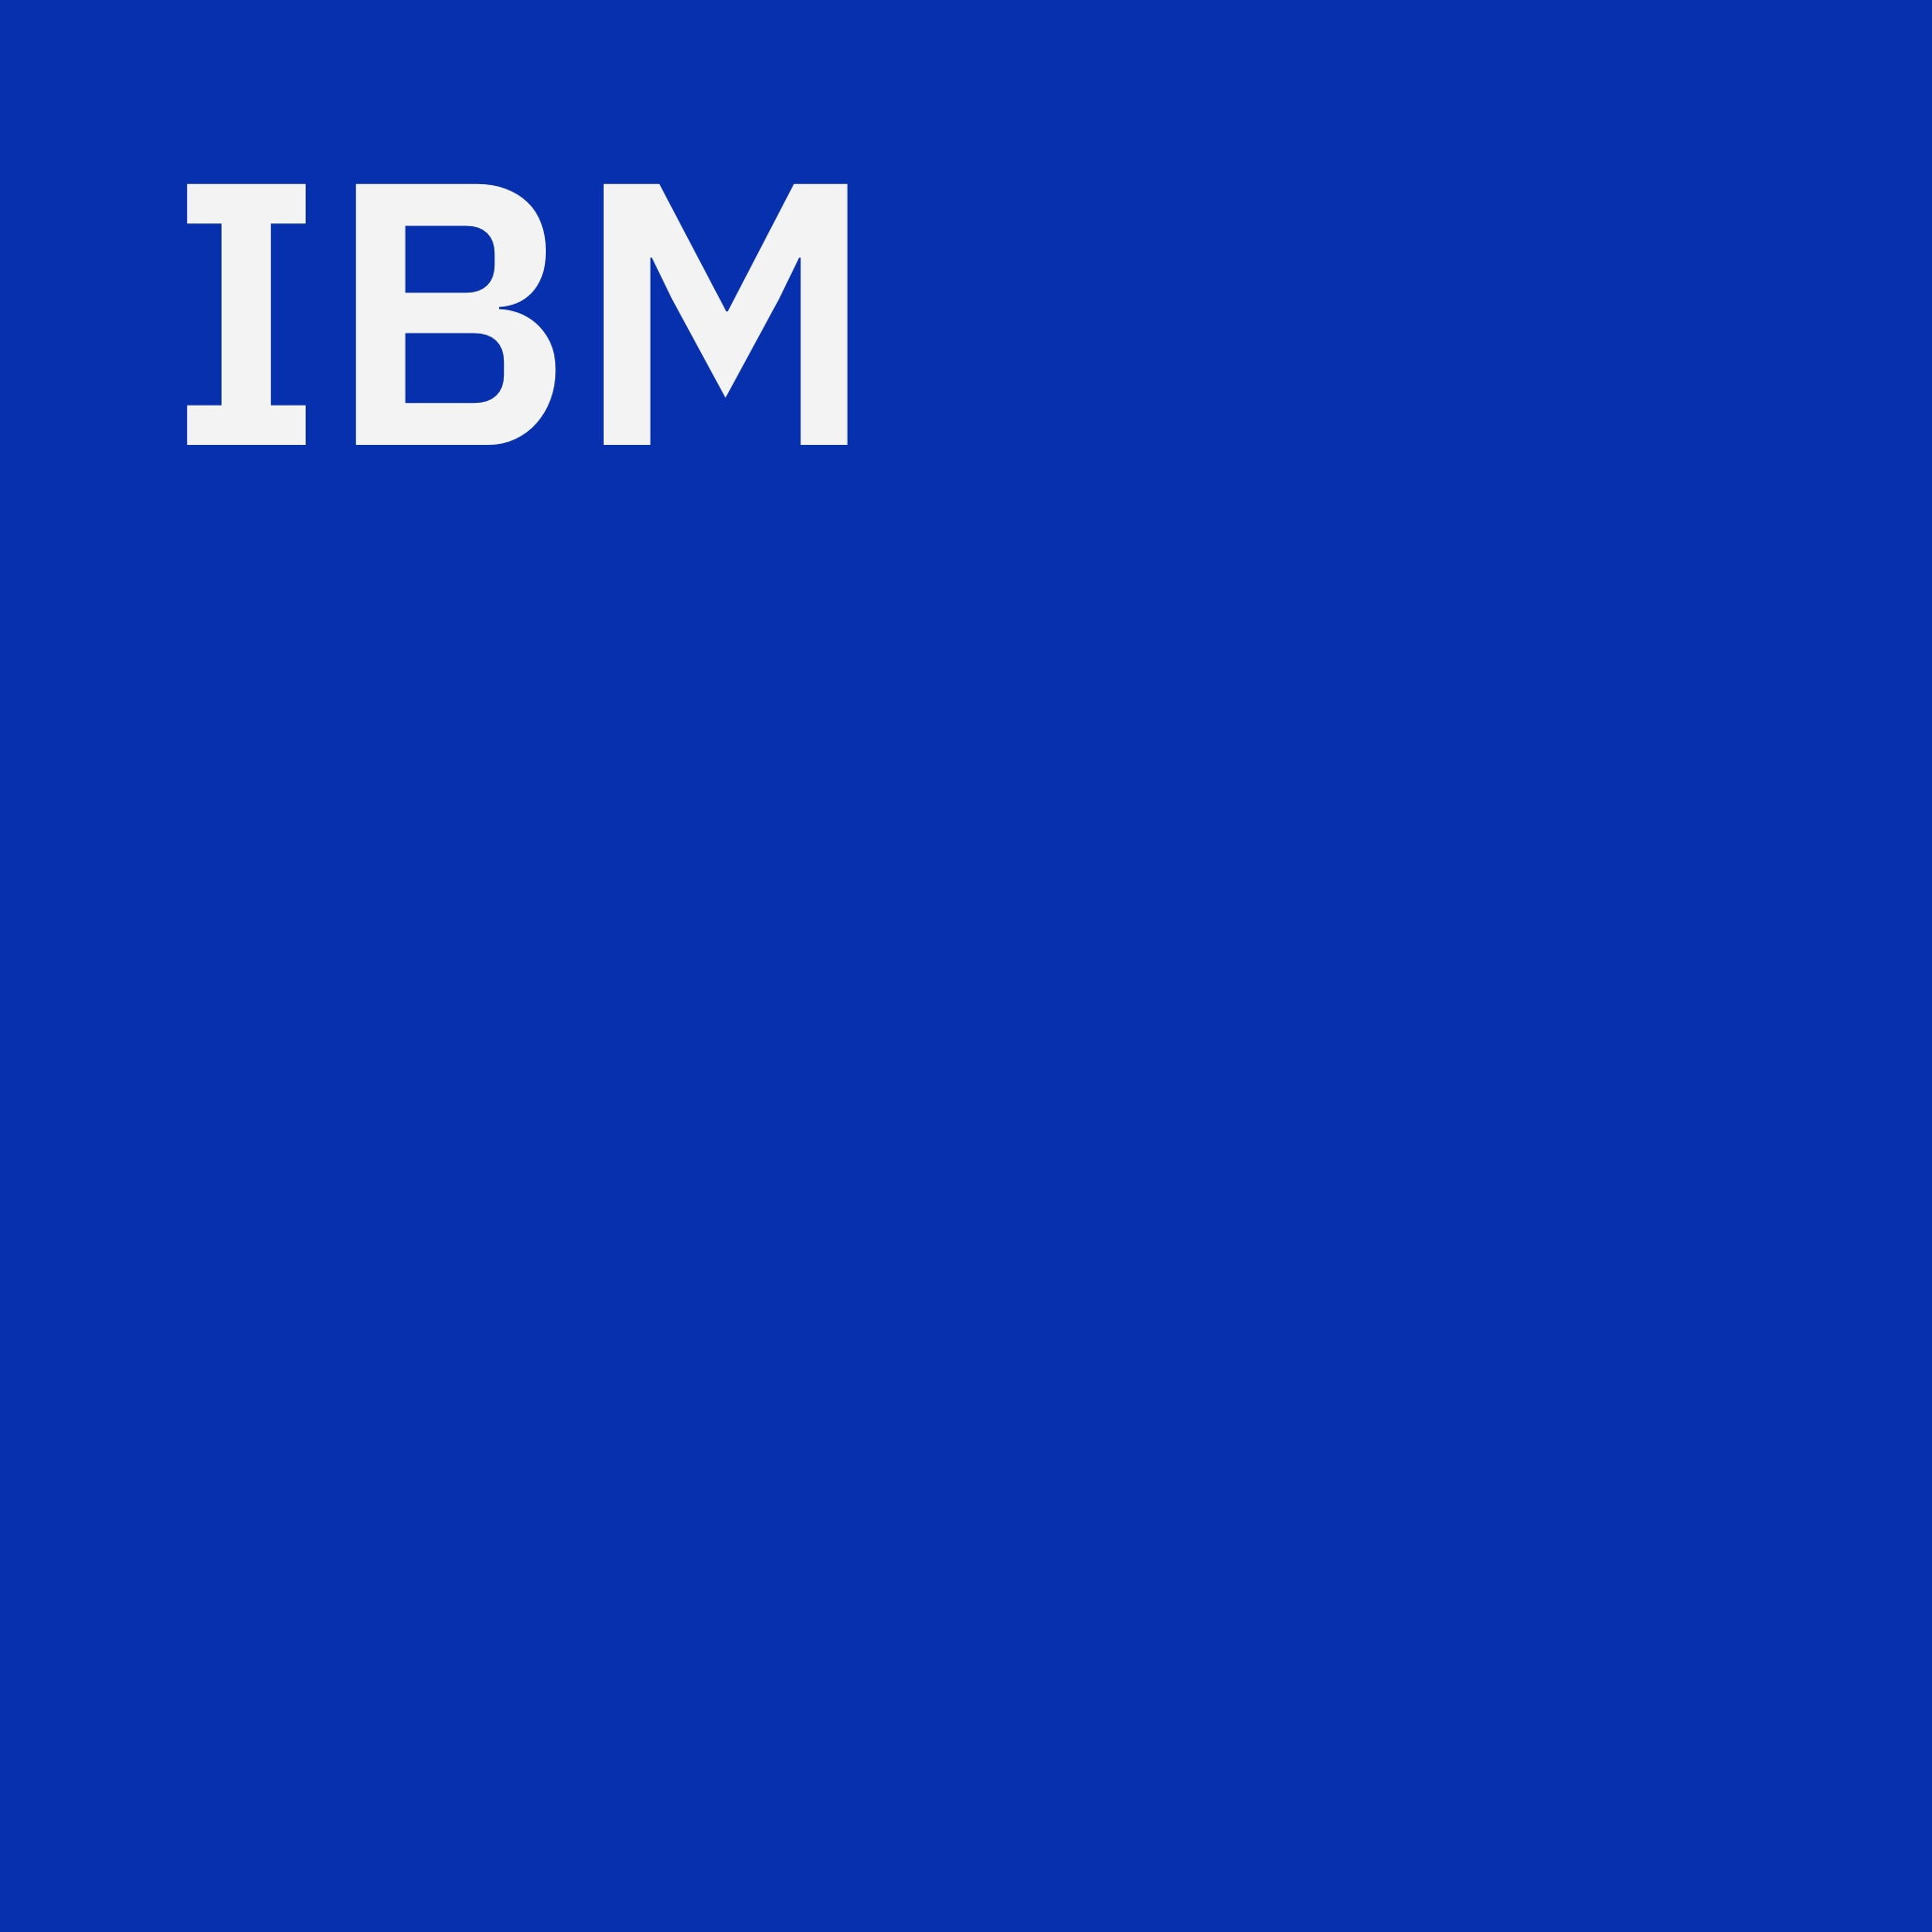 IBM: 2019 - Present